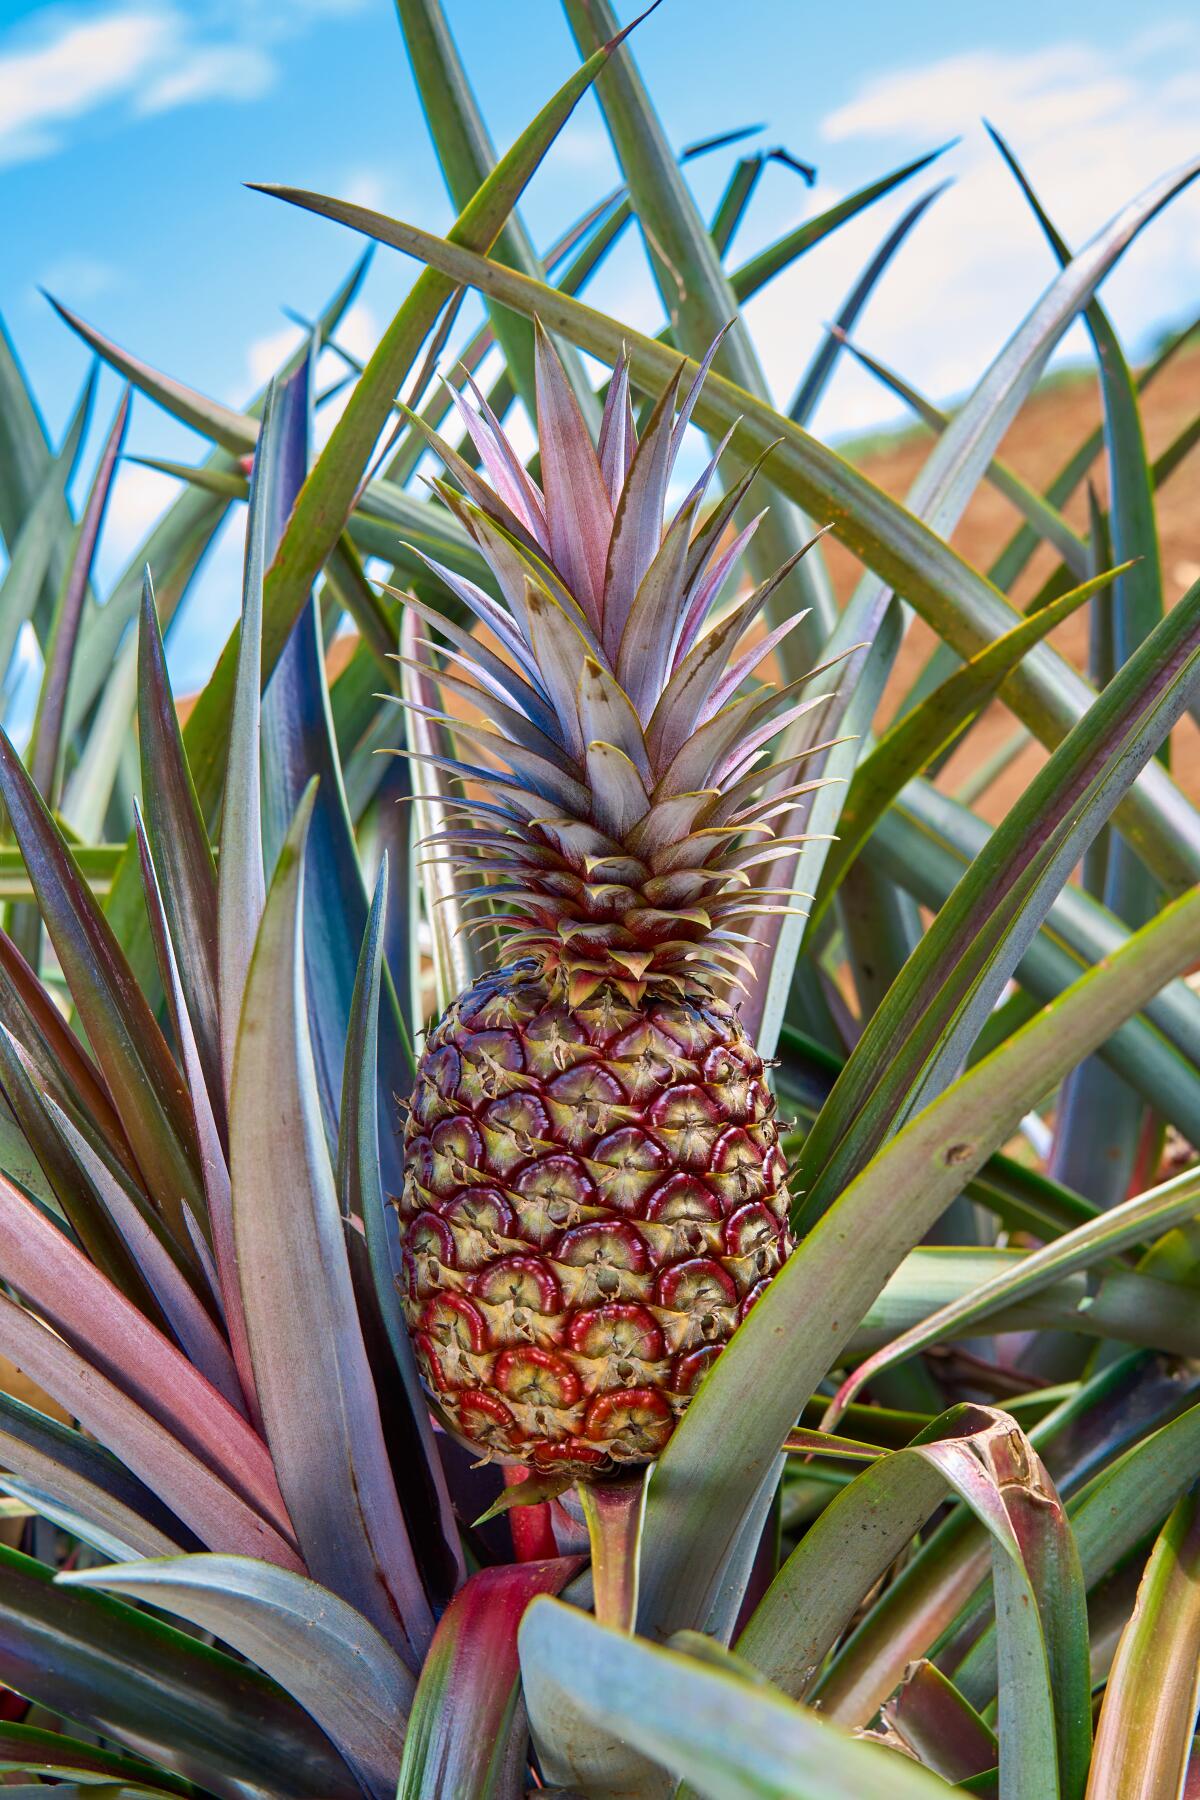 A pineapple growing in a field